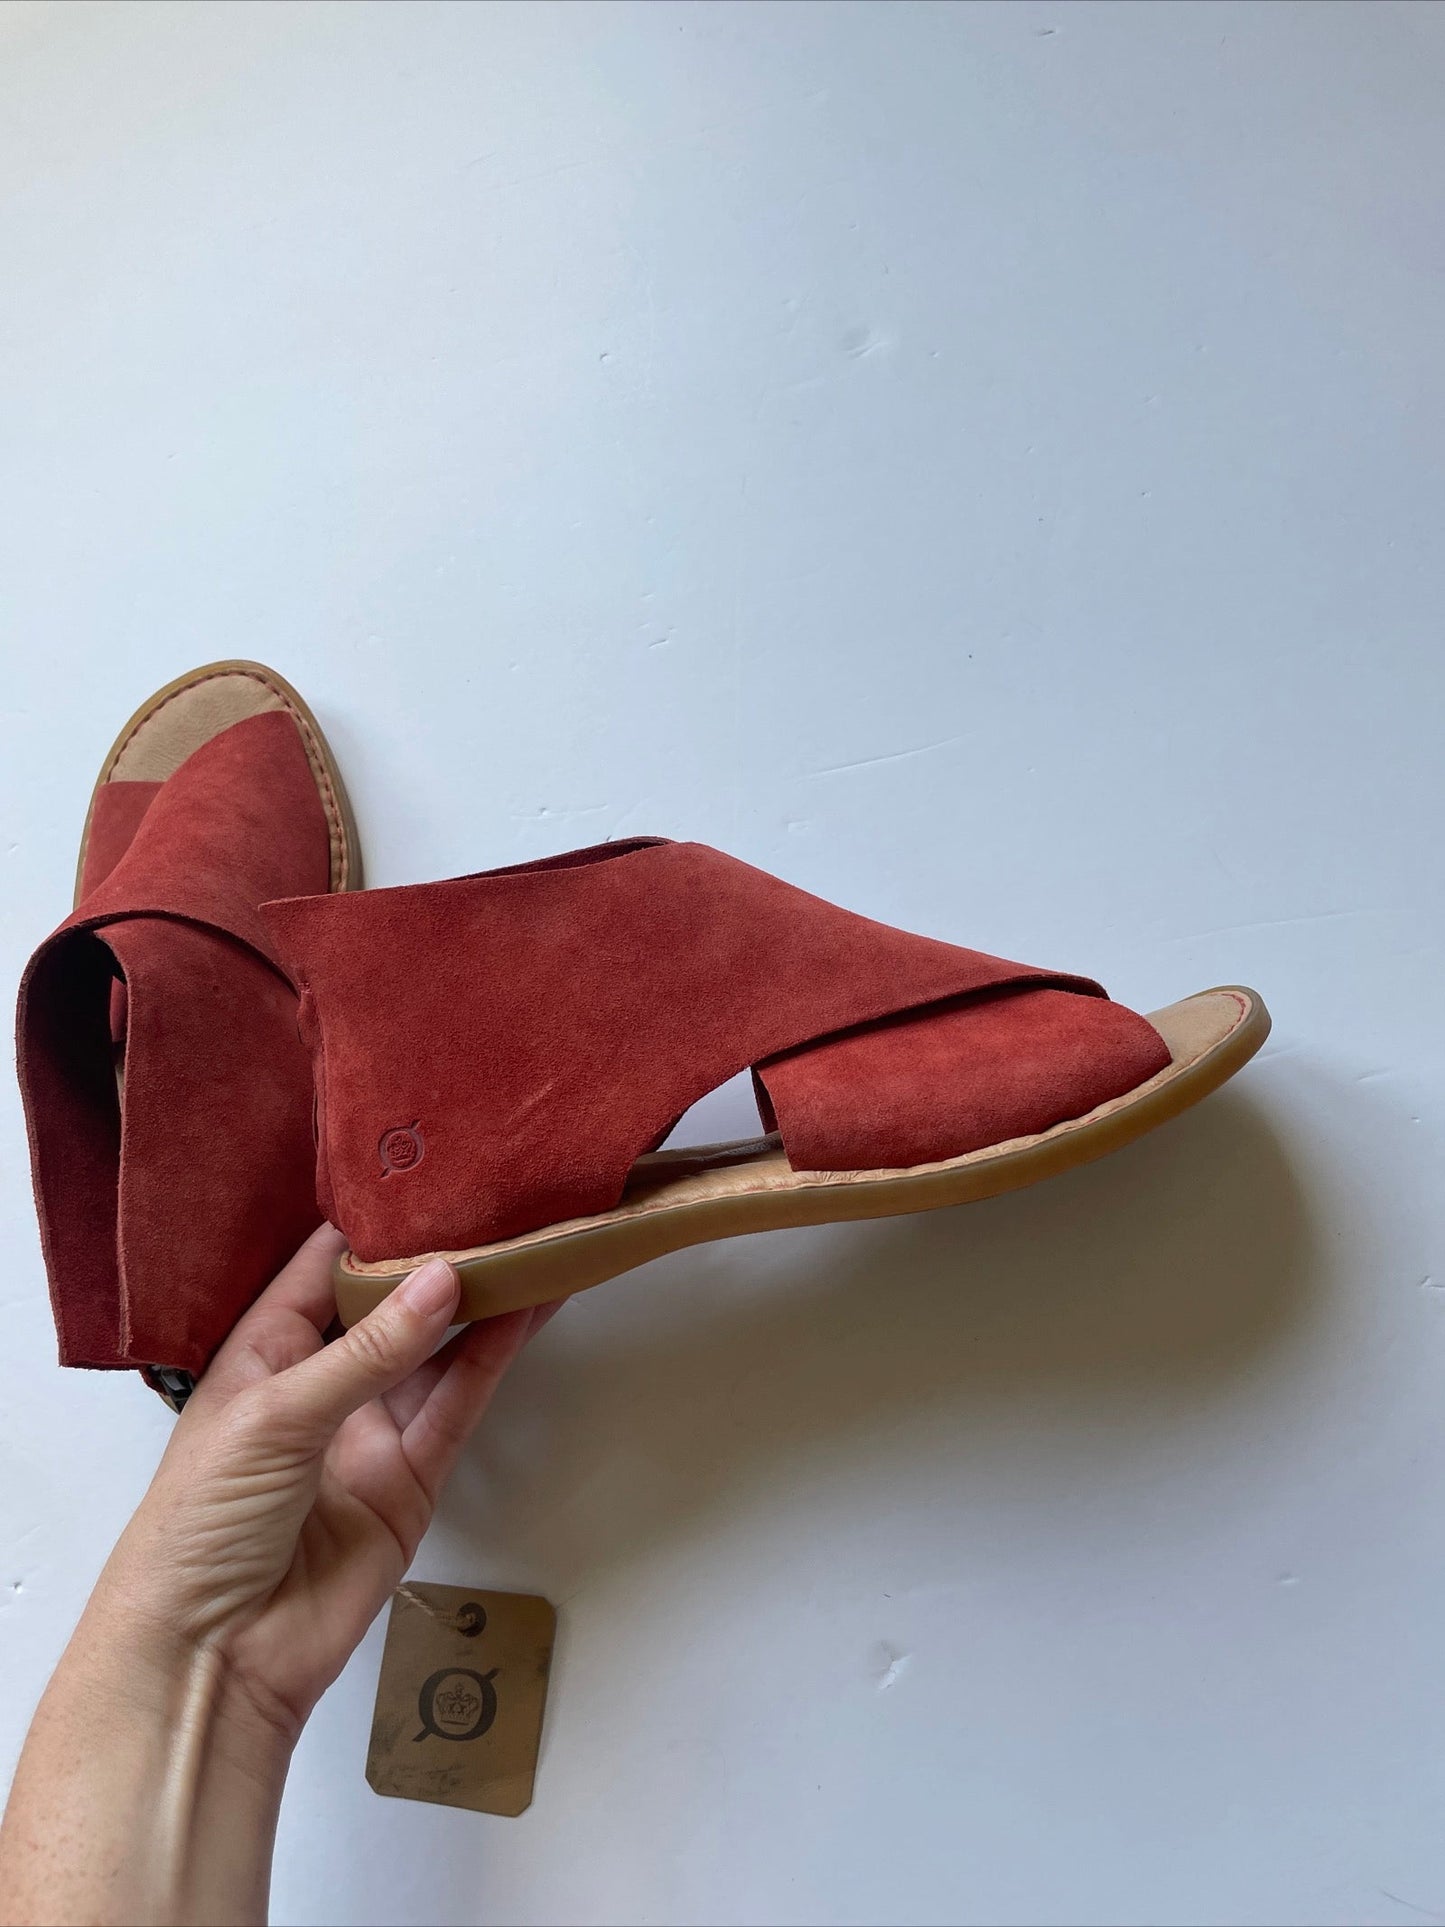 Coral Shoes Flats Born, Size 8